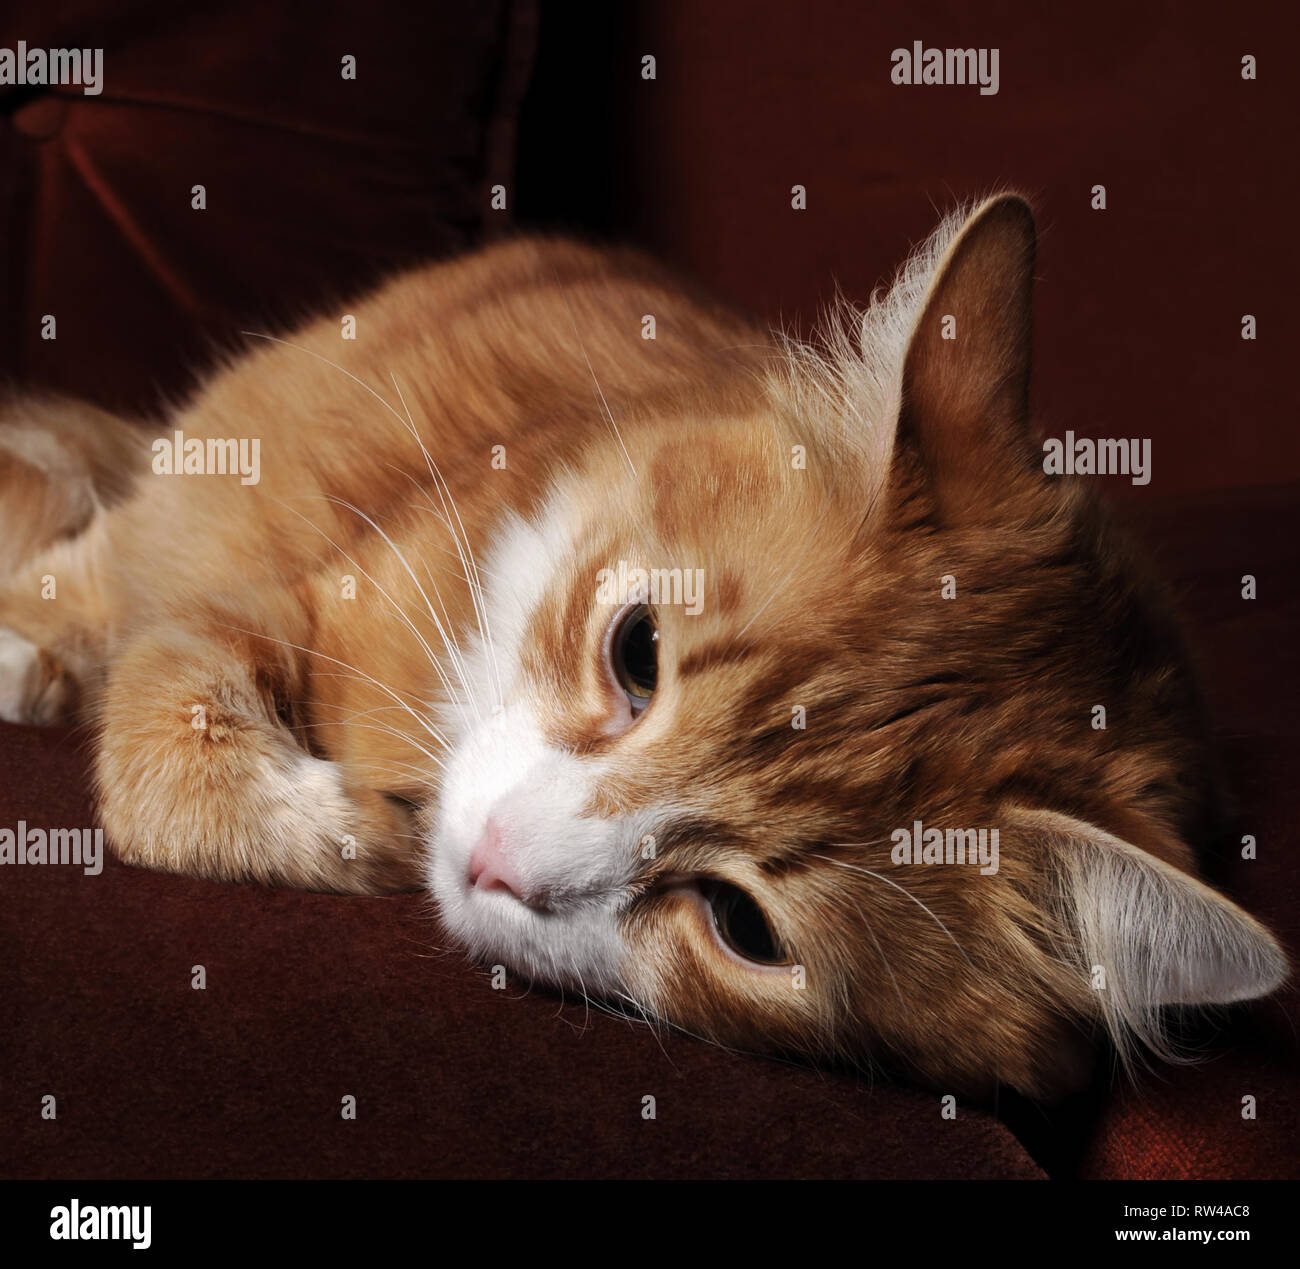 Frazzled Cat Stock Photos & Frazzled Cat Stock Images - Alamy